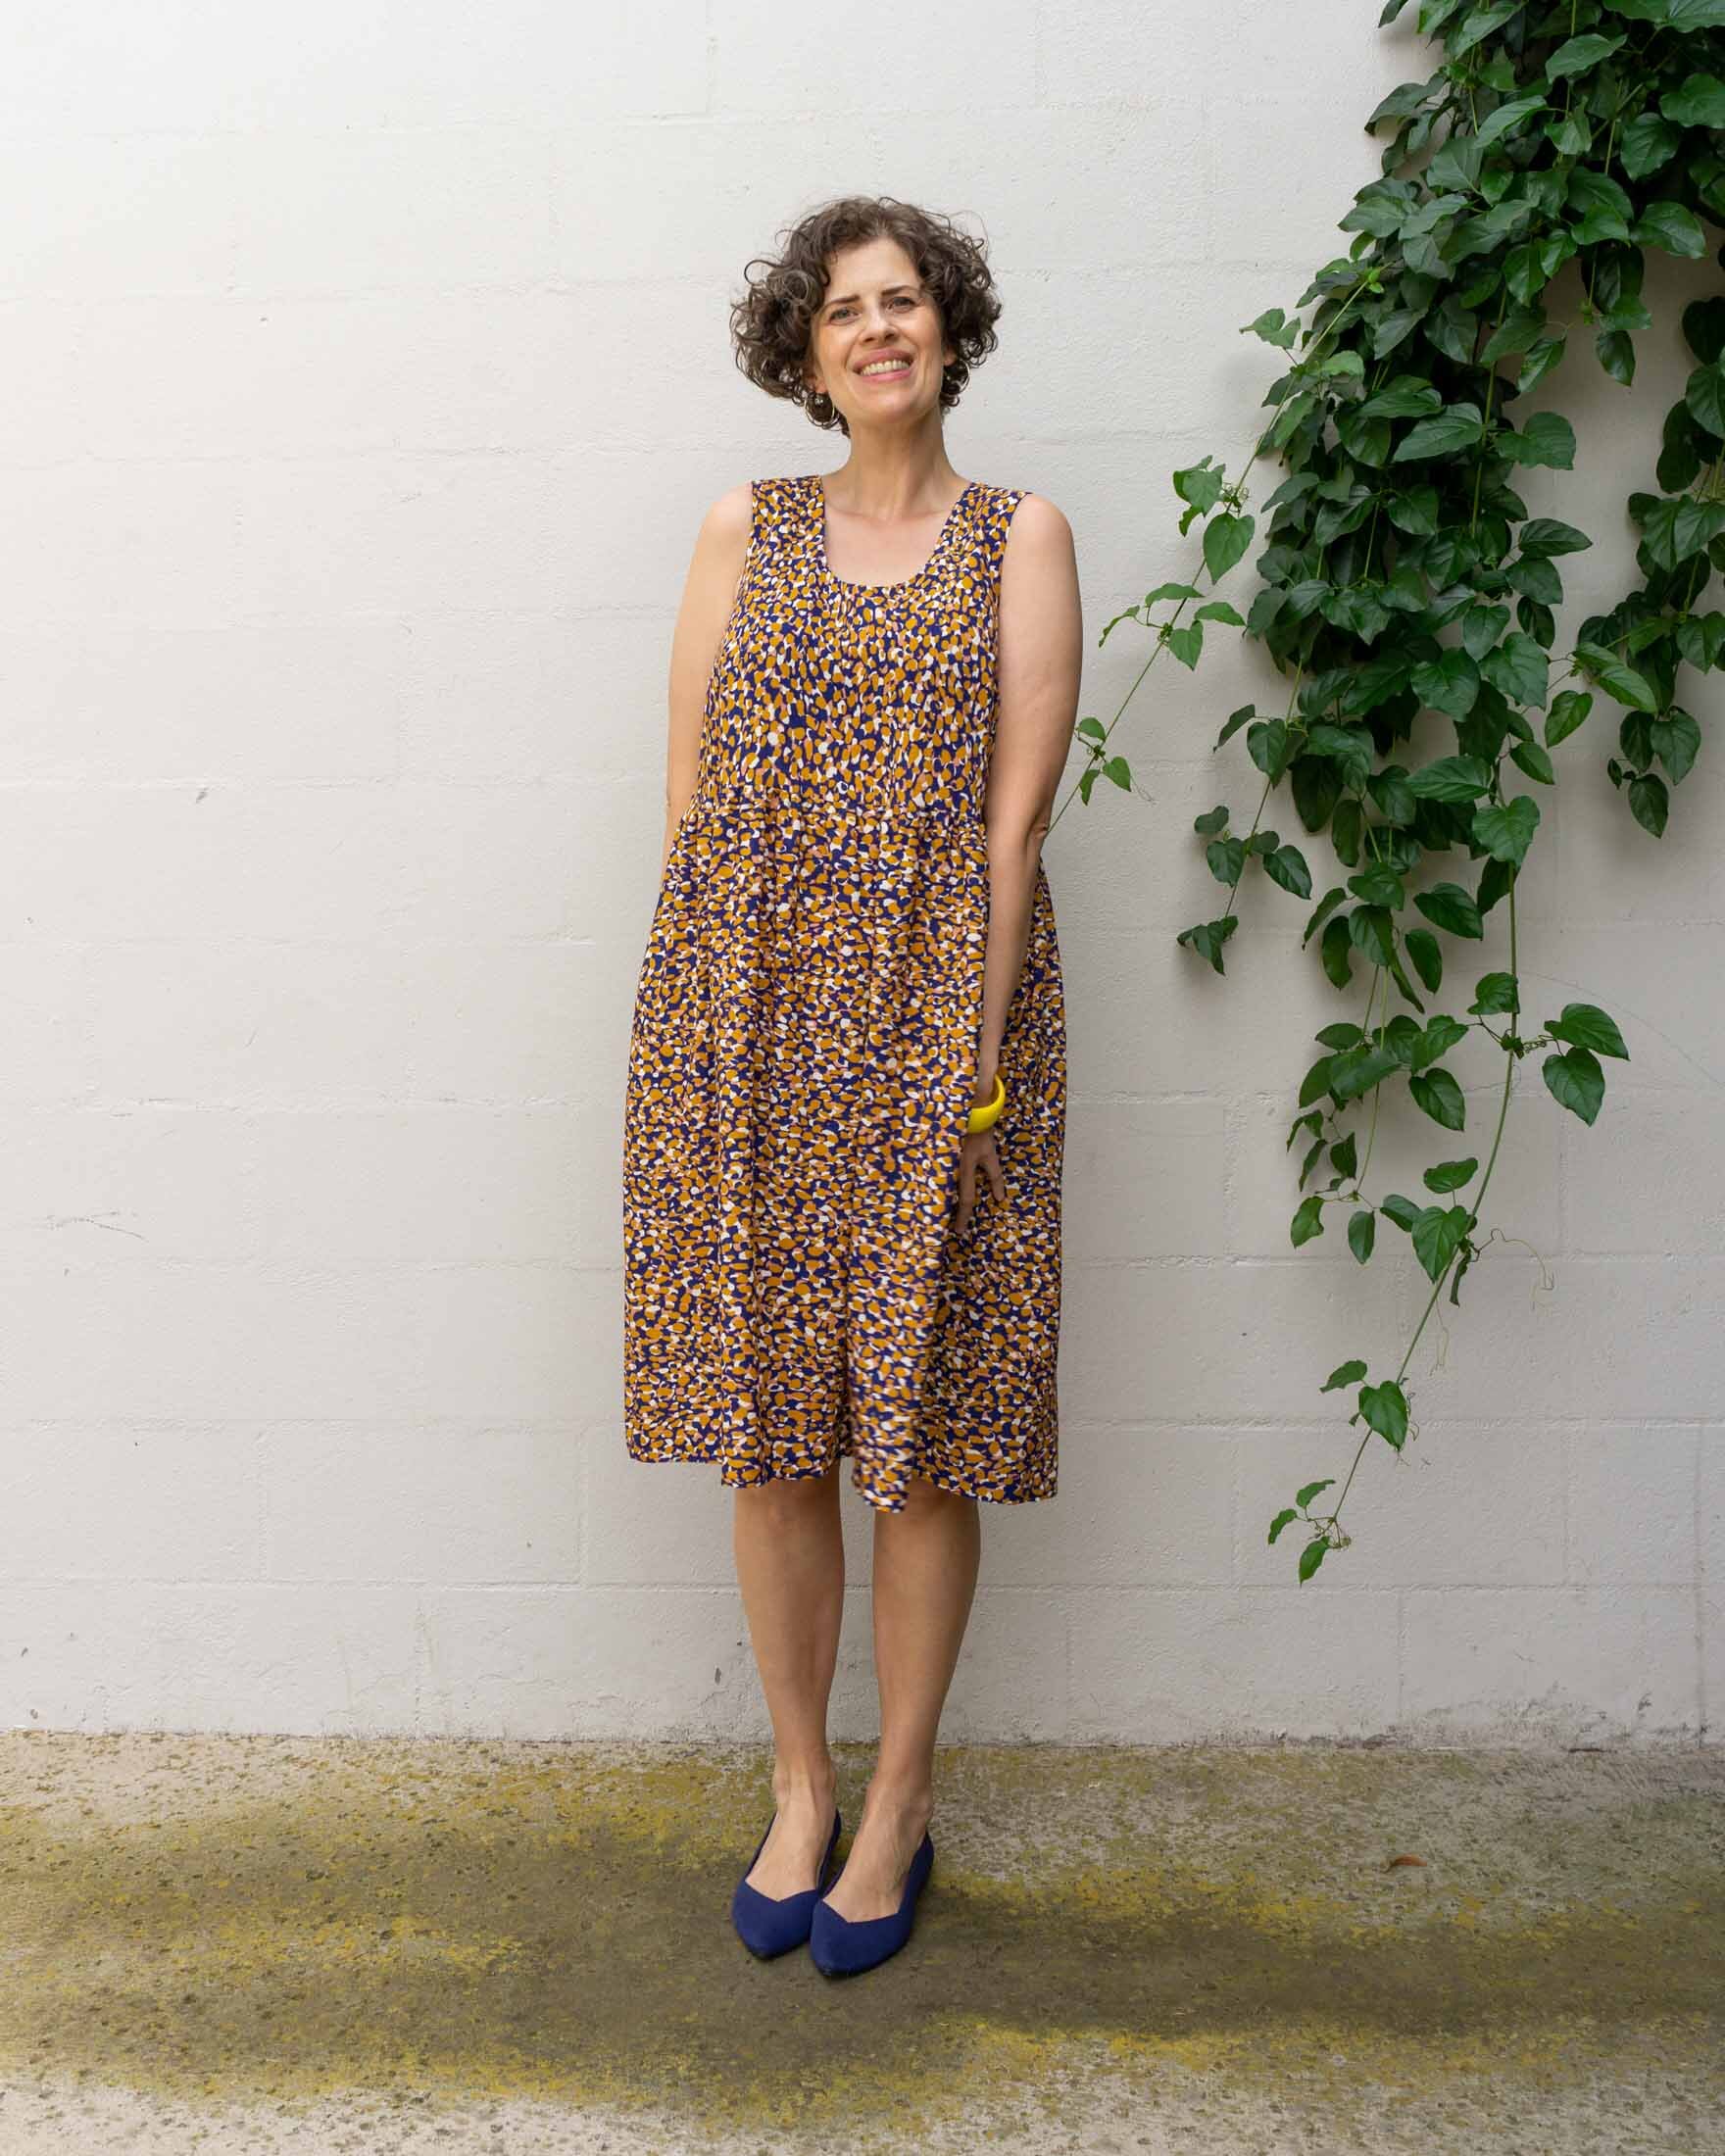 DIY Gathered Waist Dress – Miri Tank Top Pattern Hack — Sew DIY